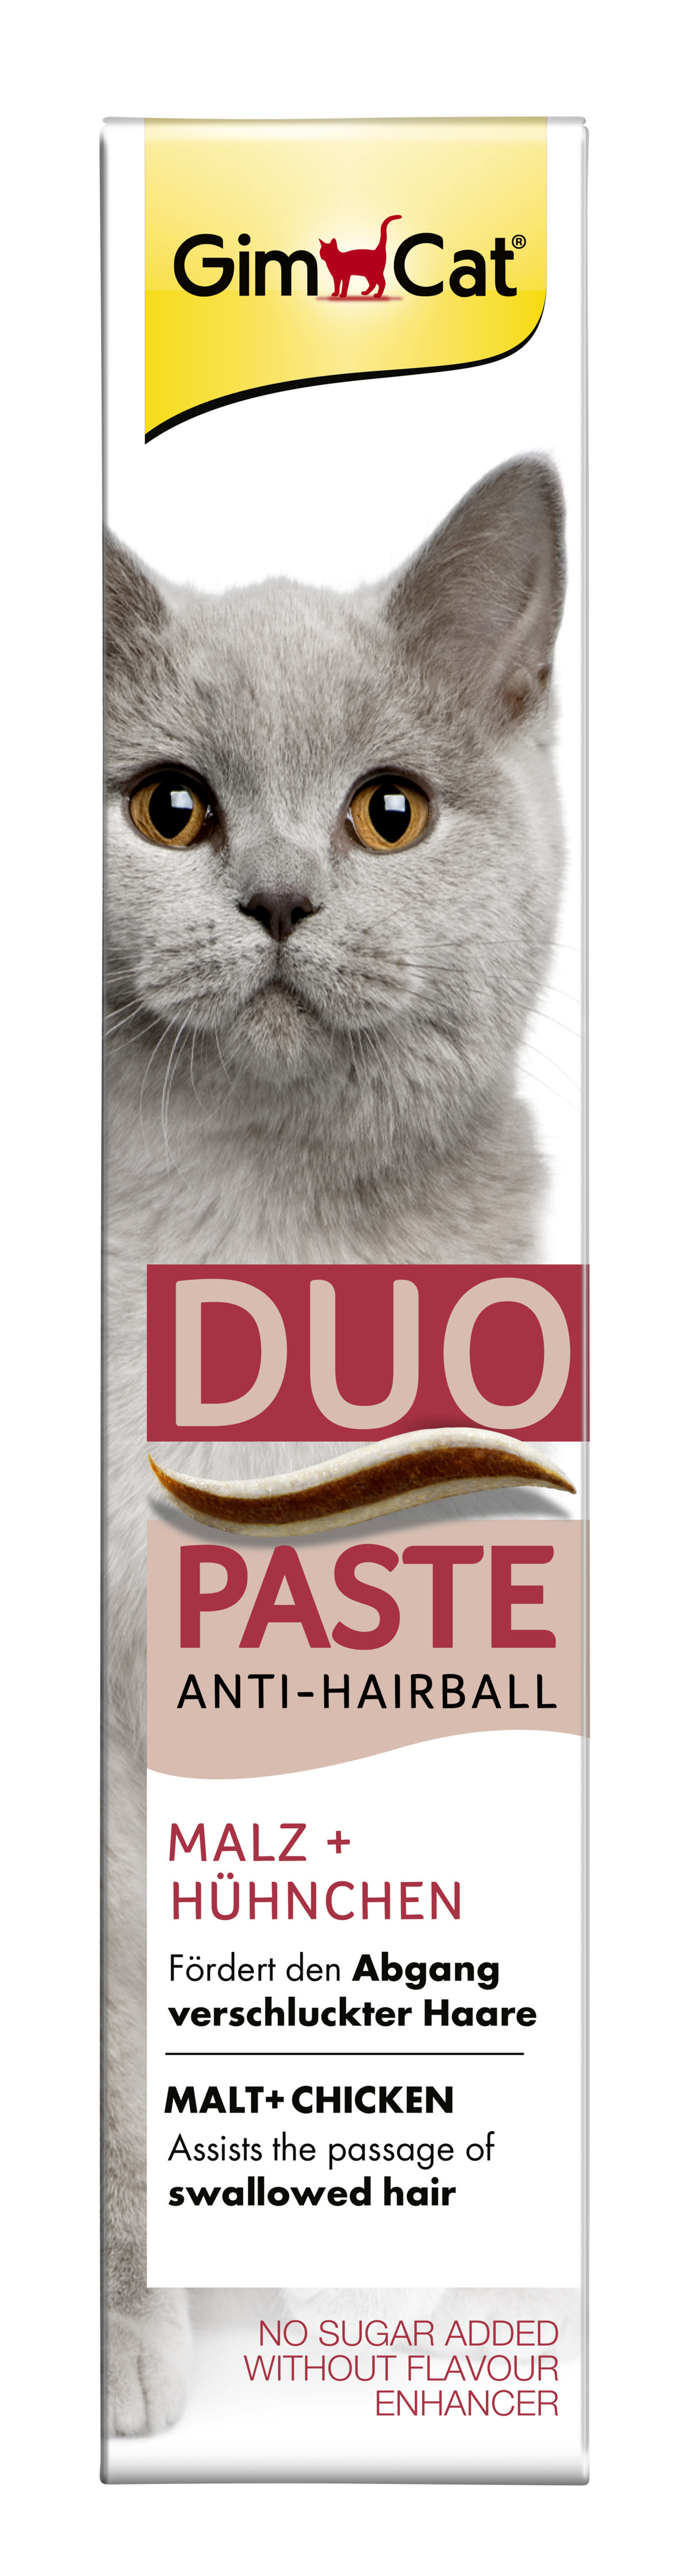 Duo-Paste 2x50g Anti-Hairball Hühnchen + Malz